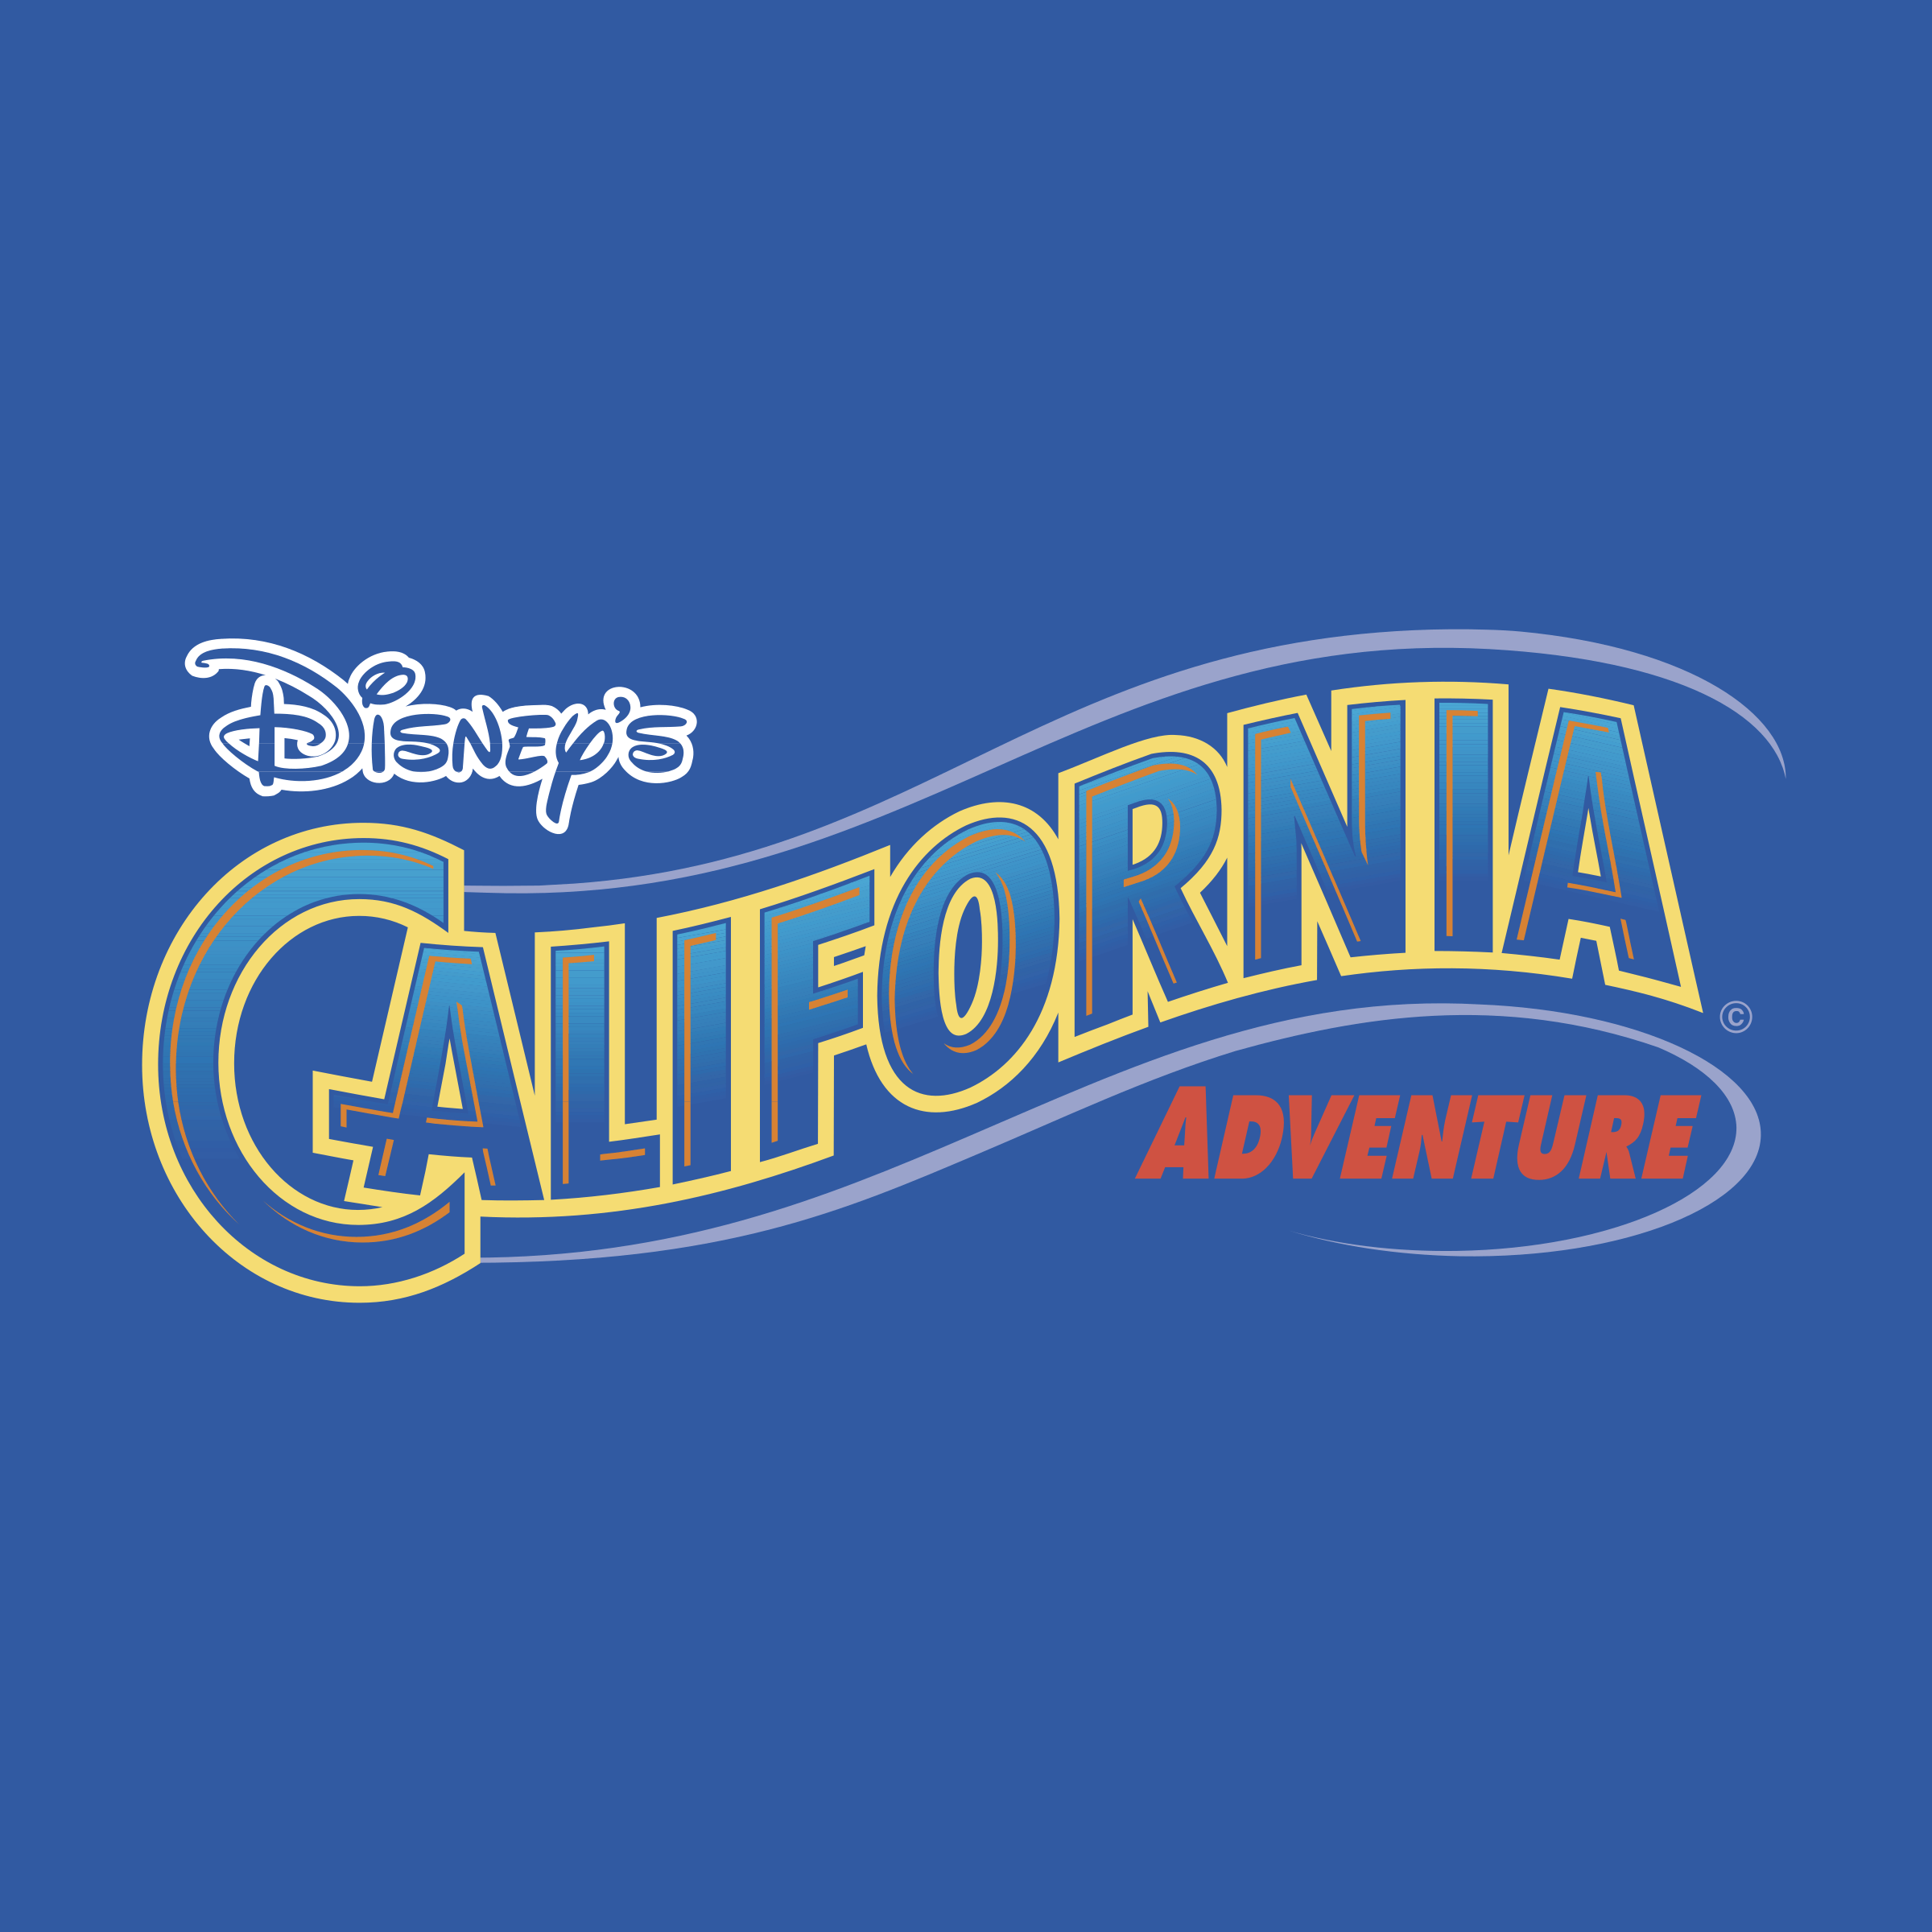 Disney's California Adventure Logo - Disney's California Adventure Logo PNG Transparent & SVG Vector